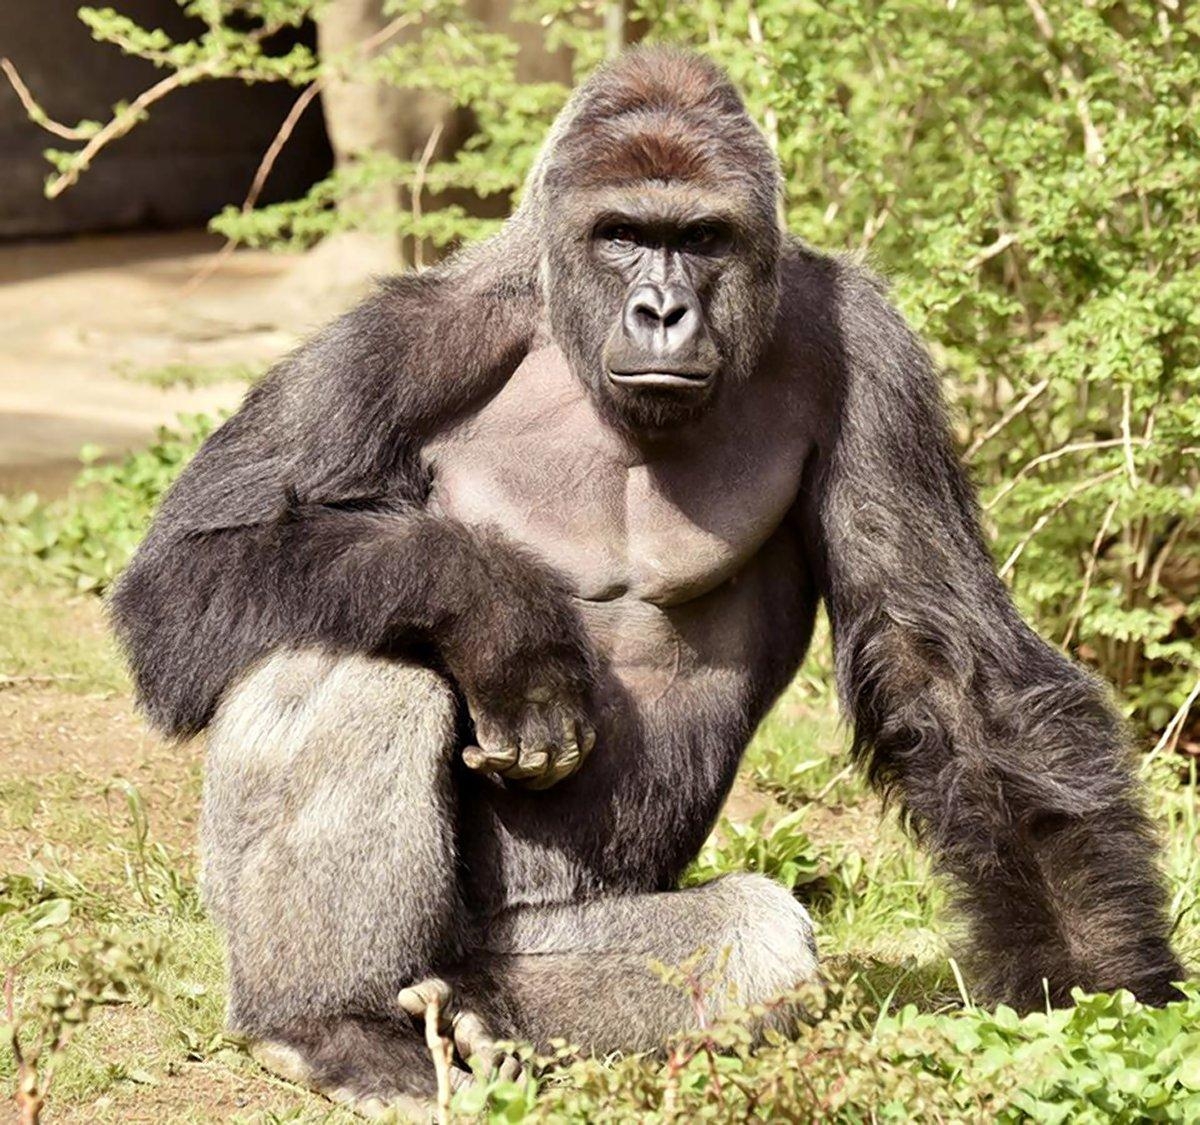 Racism has found its way into the Cincinnati Zoo saga